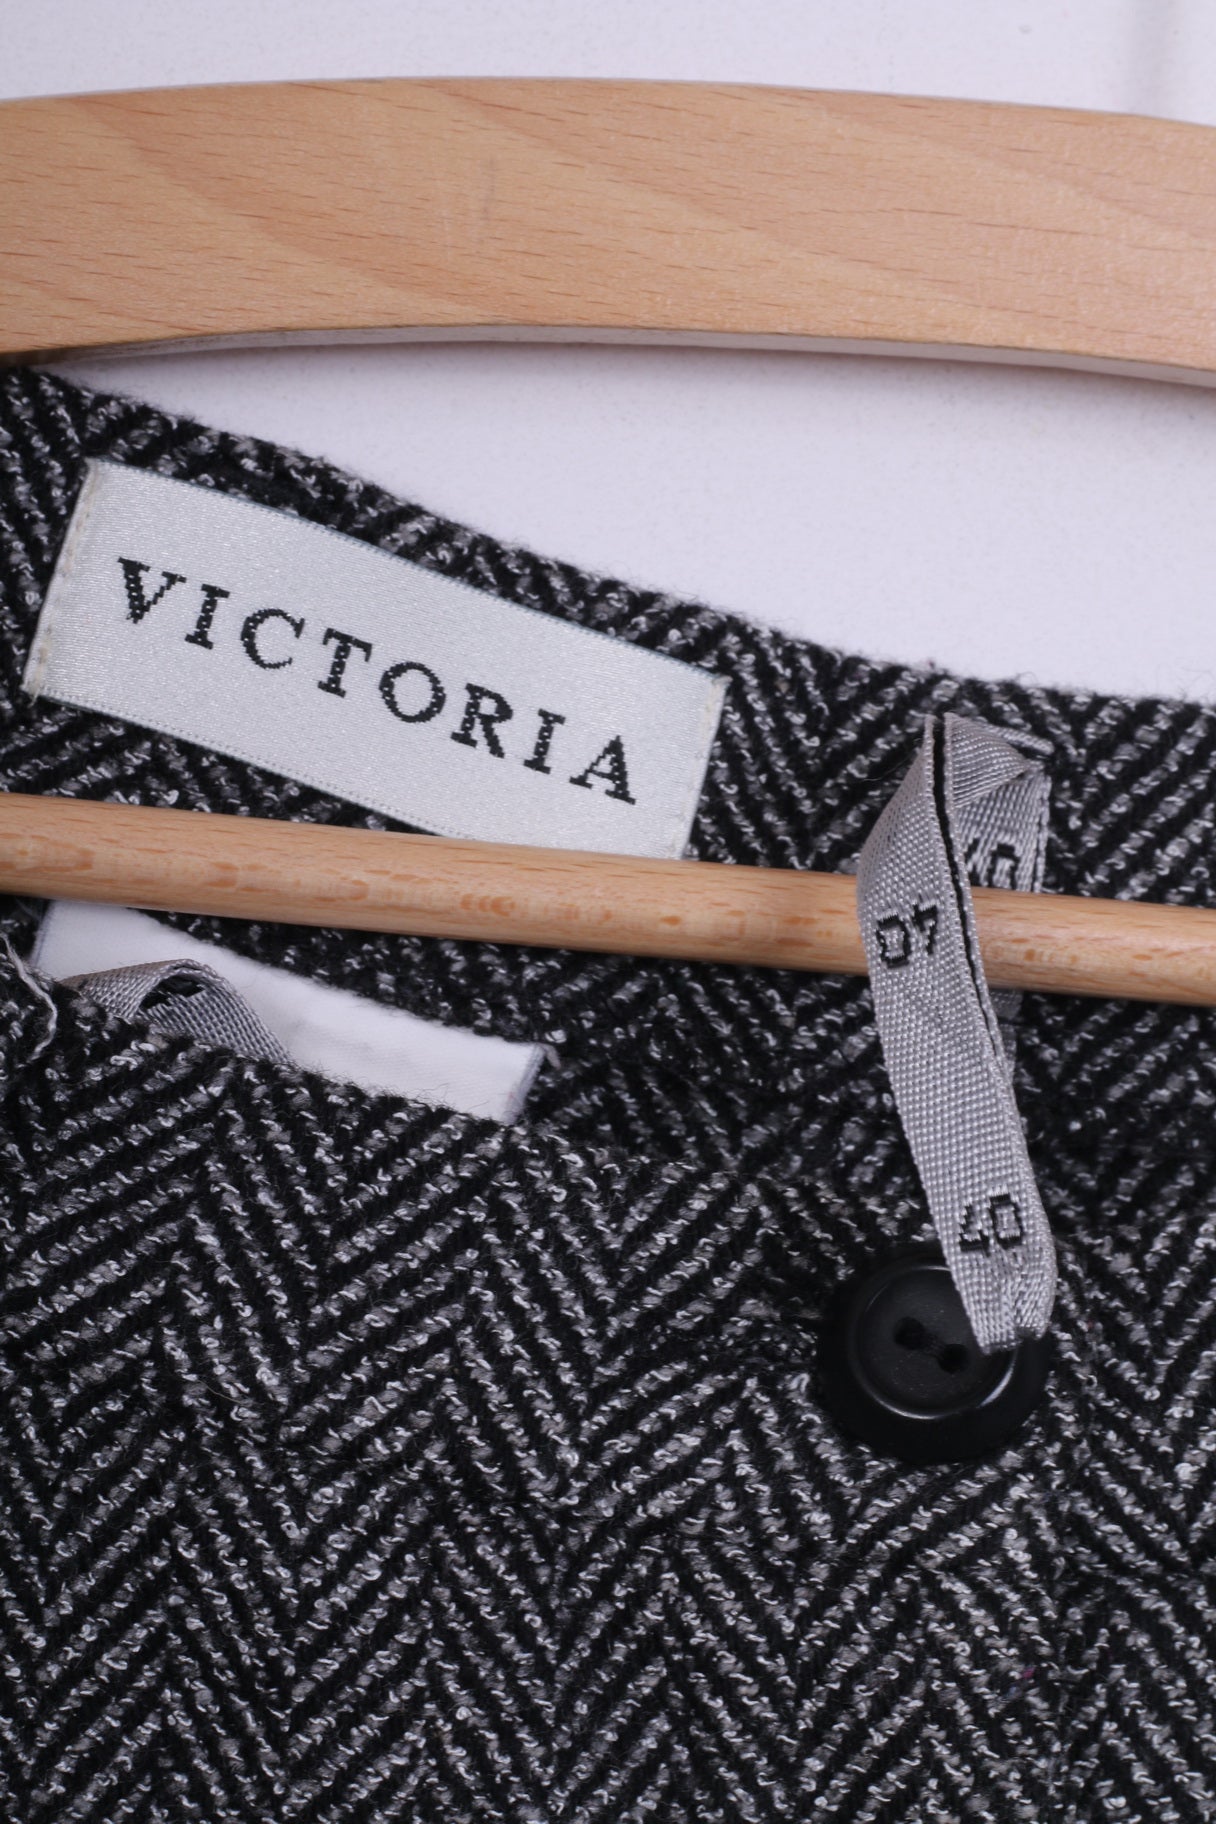 Set completo da donna Victoria 40 M, pantaloni, blazer, 2 pezzi, business a spina di pesce, lana nera/bianca